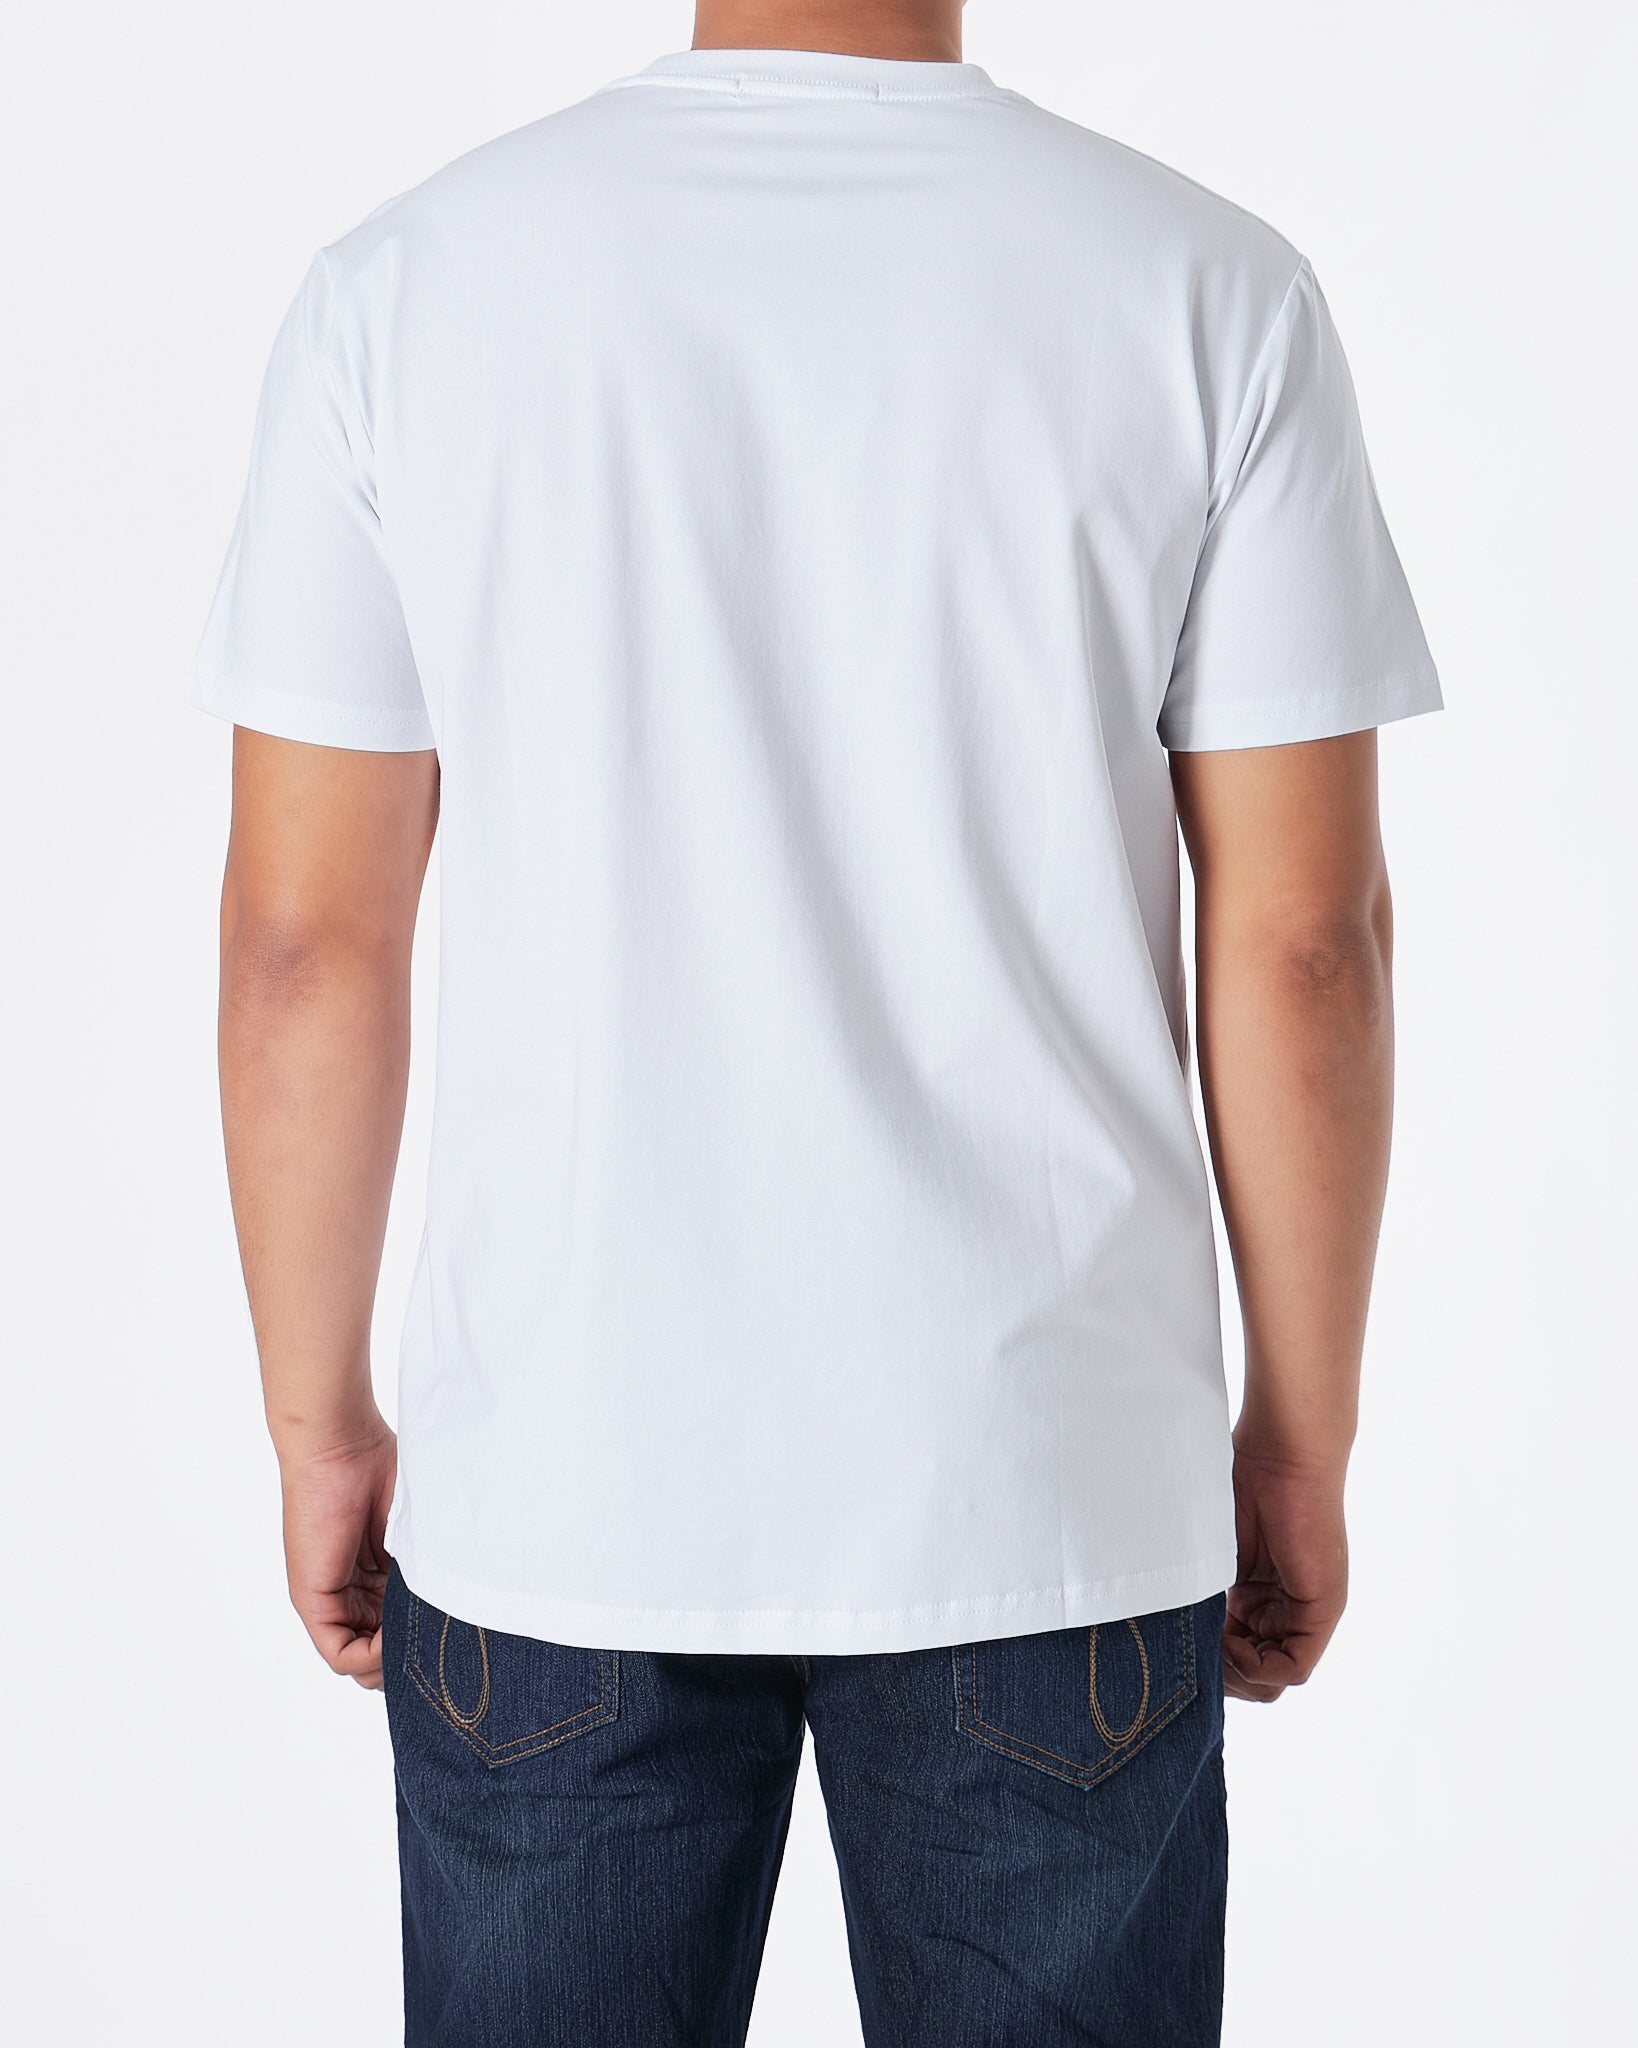 MOI OUTFIT-ARM Exchange Men White T-Shirt 17.90